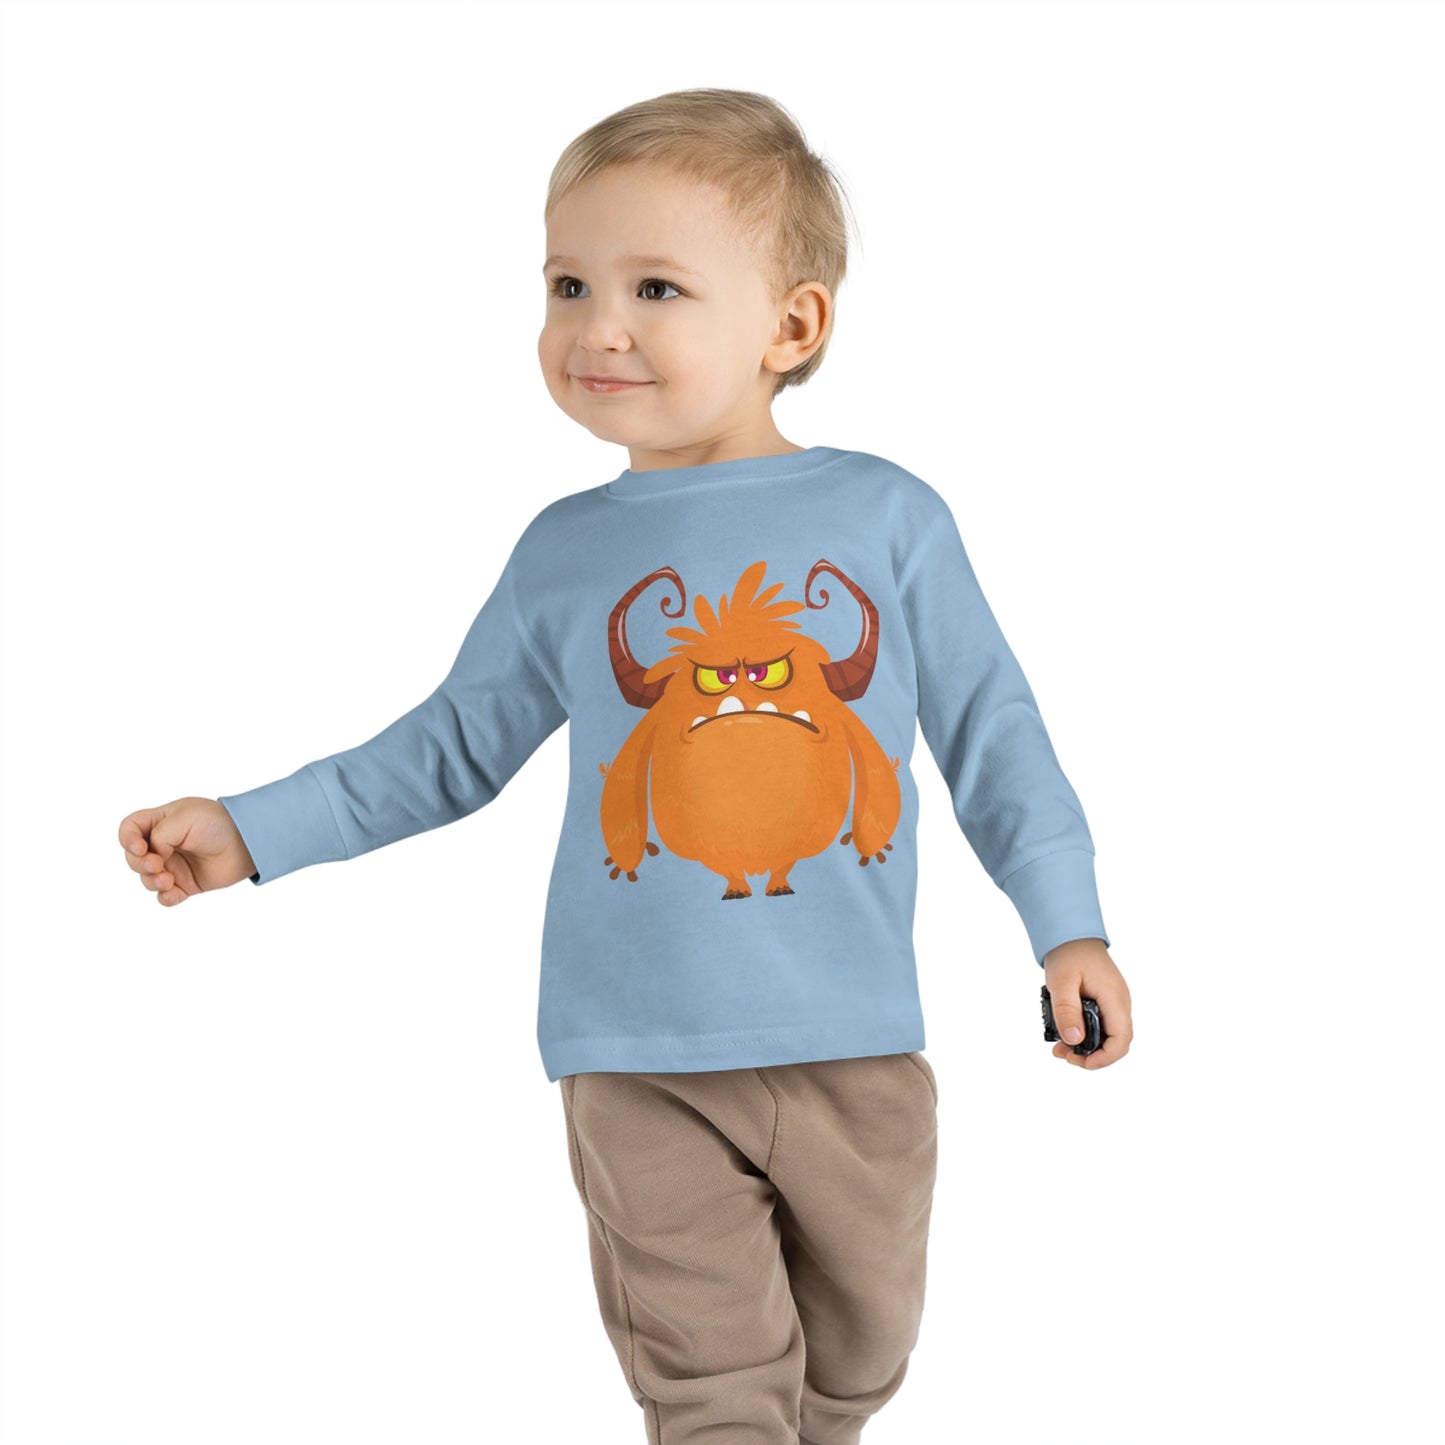 Cute Orange Monster Toddler Long Sleeve Tee Sizes 2T-6T